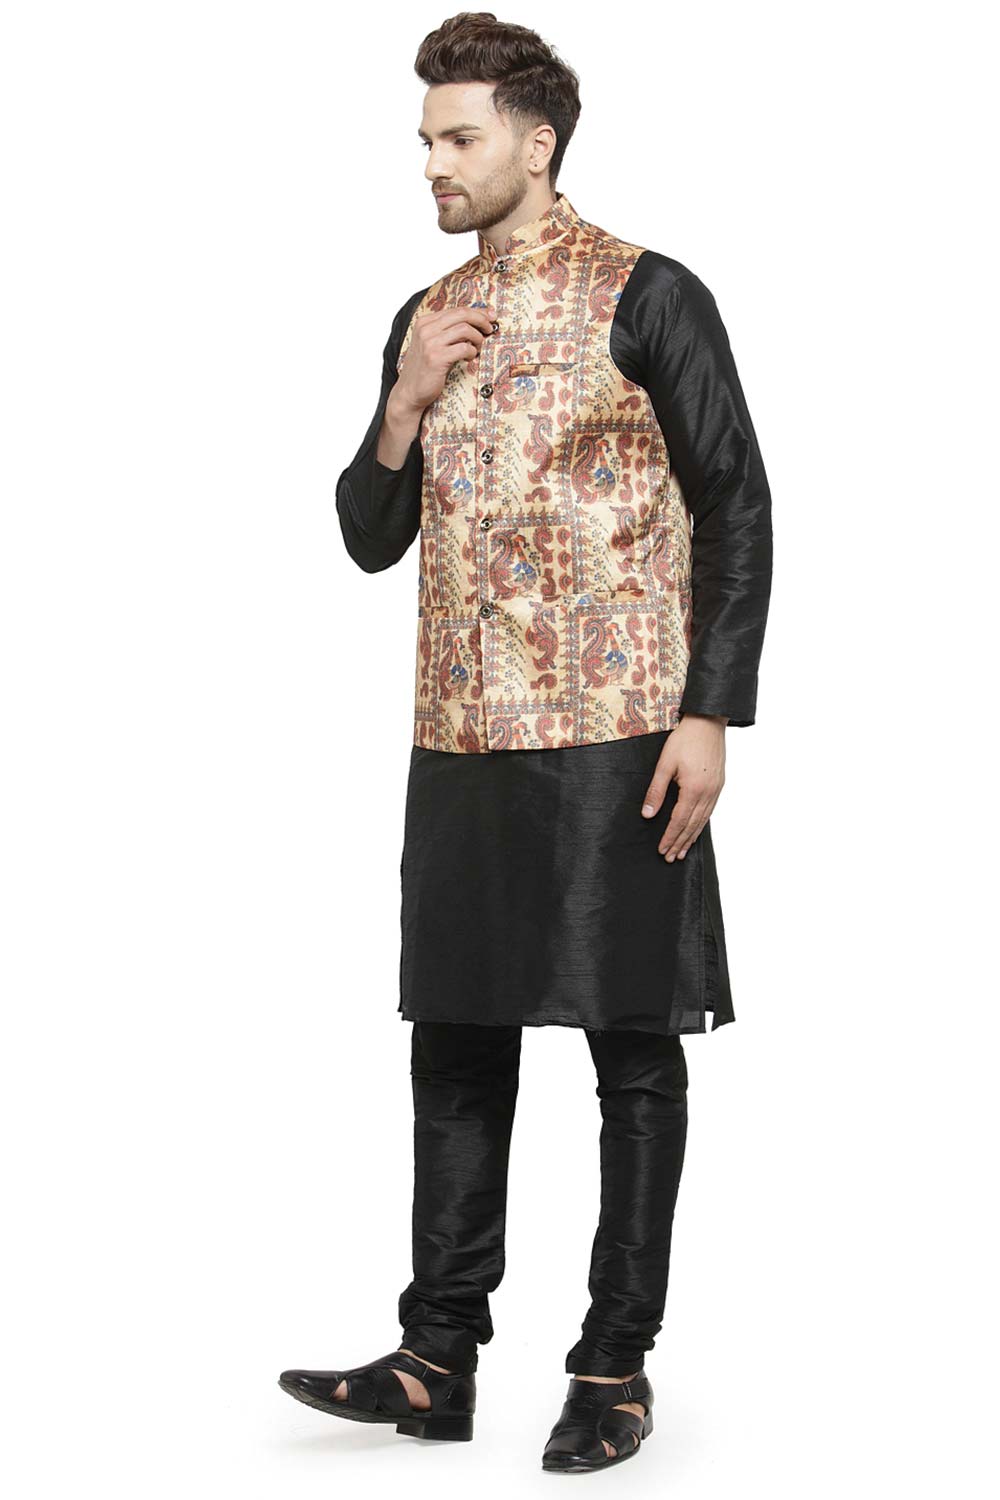 Buy Men's Black Silk Blend Paisley Printed Men's Kurta Pajama Jacket Set Online